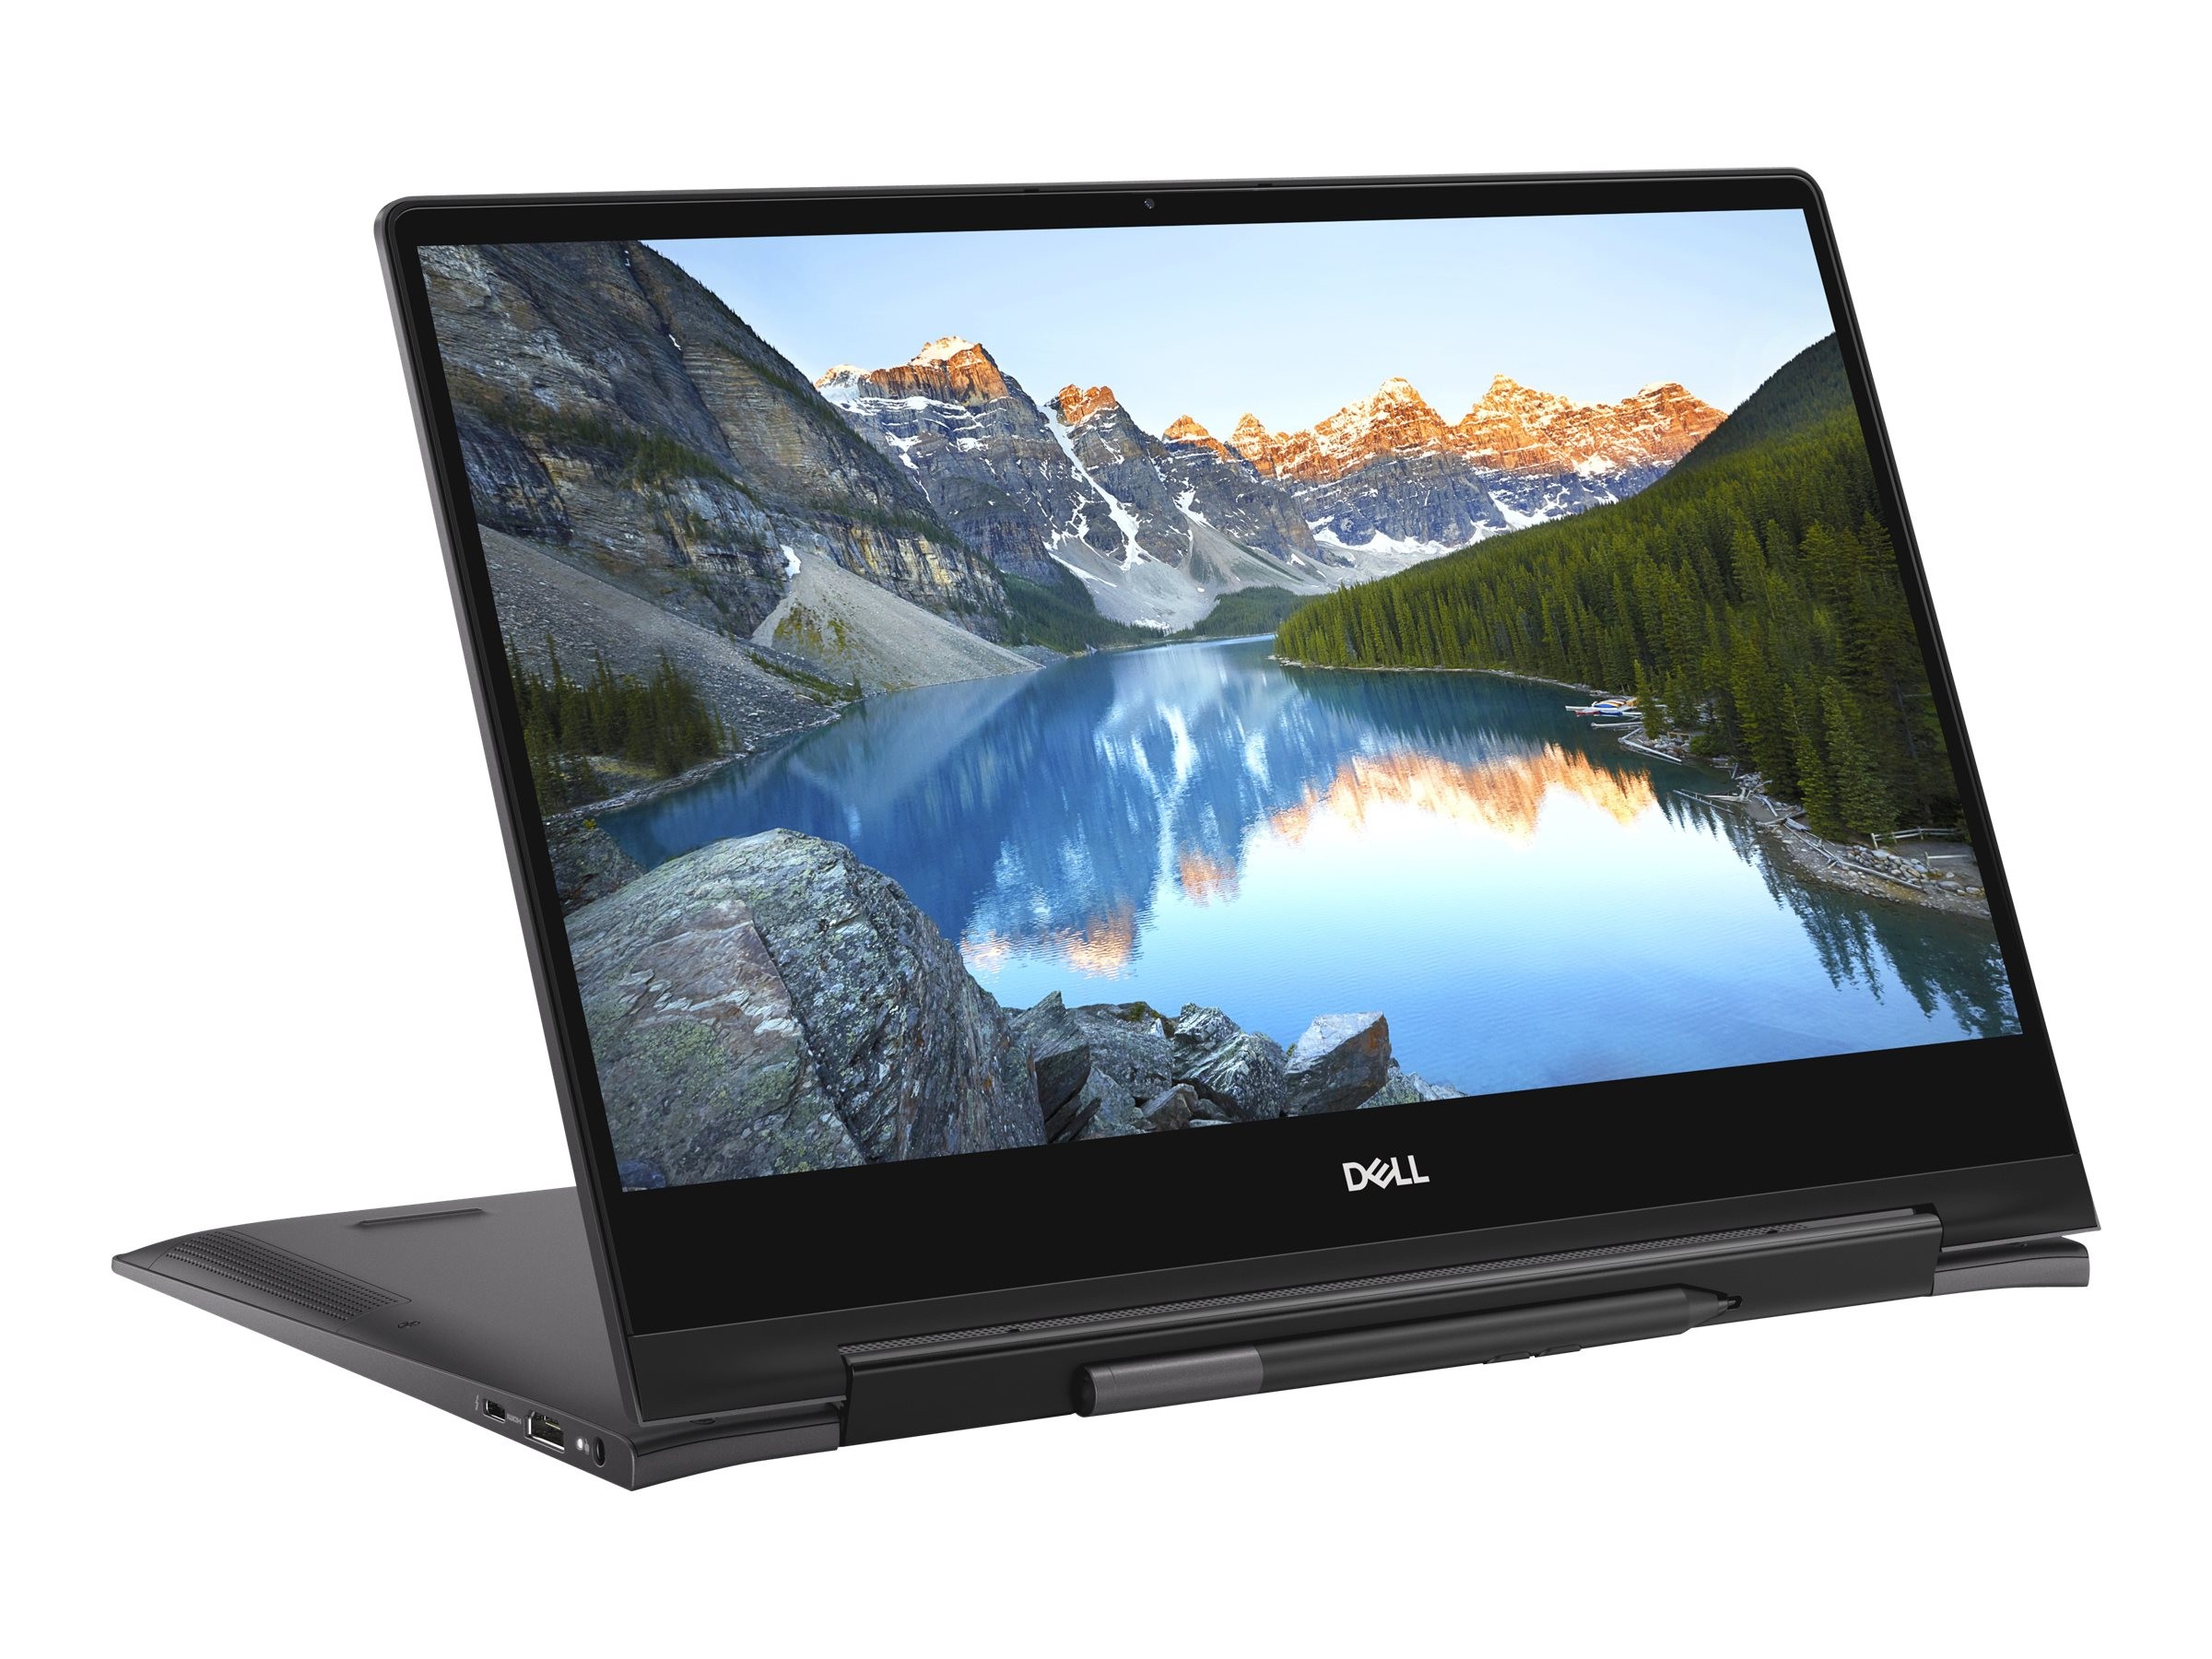 Dell Inspiron 7391 13.3" 4K UHD Touch i7-10510U 1.8GH 16GB 512GB W10 2in1 Laptop